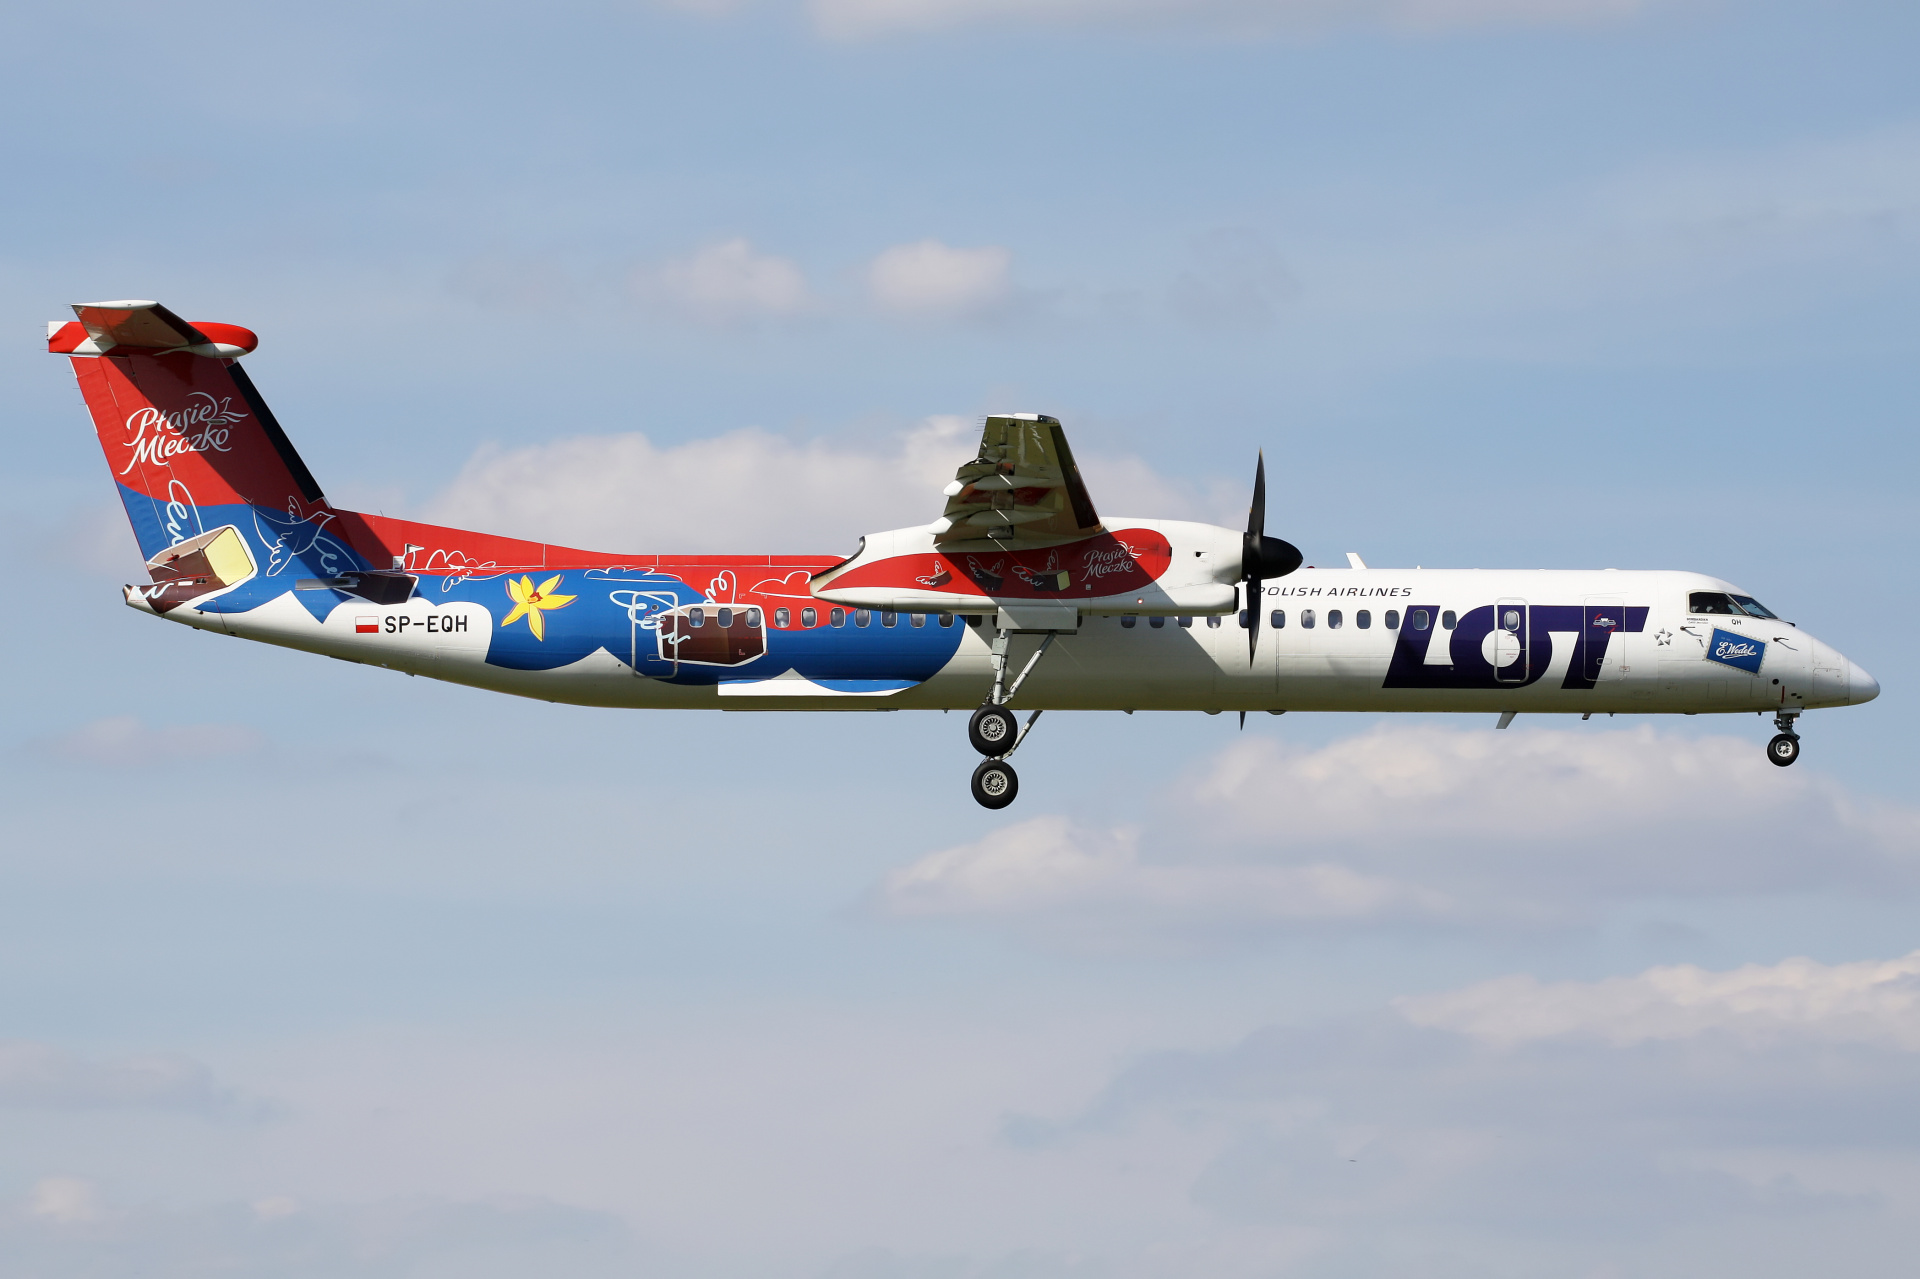 SP-EQH (Wedel Ptasie Mleczko livery) (Aircraft » EPWA Spotting » De Havilland Canada DHC-8 Dash 8 » LOT Polish Airlines)